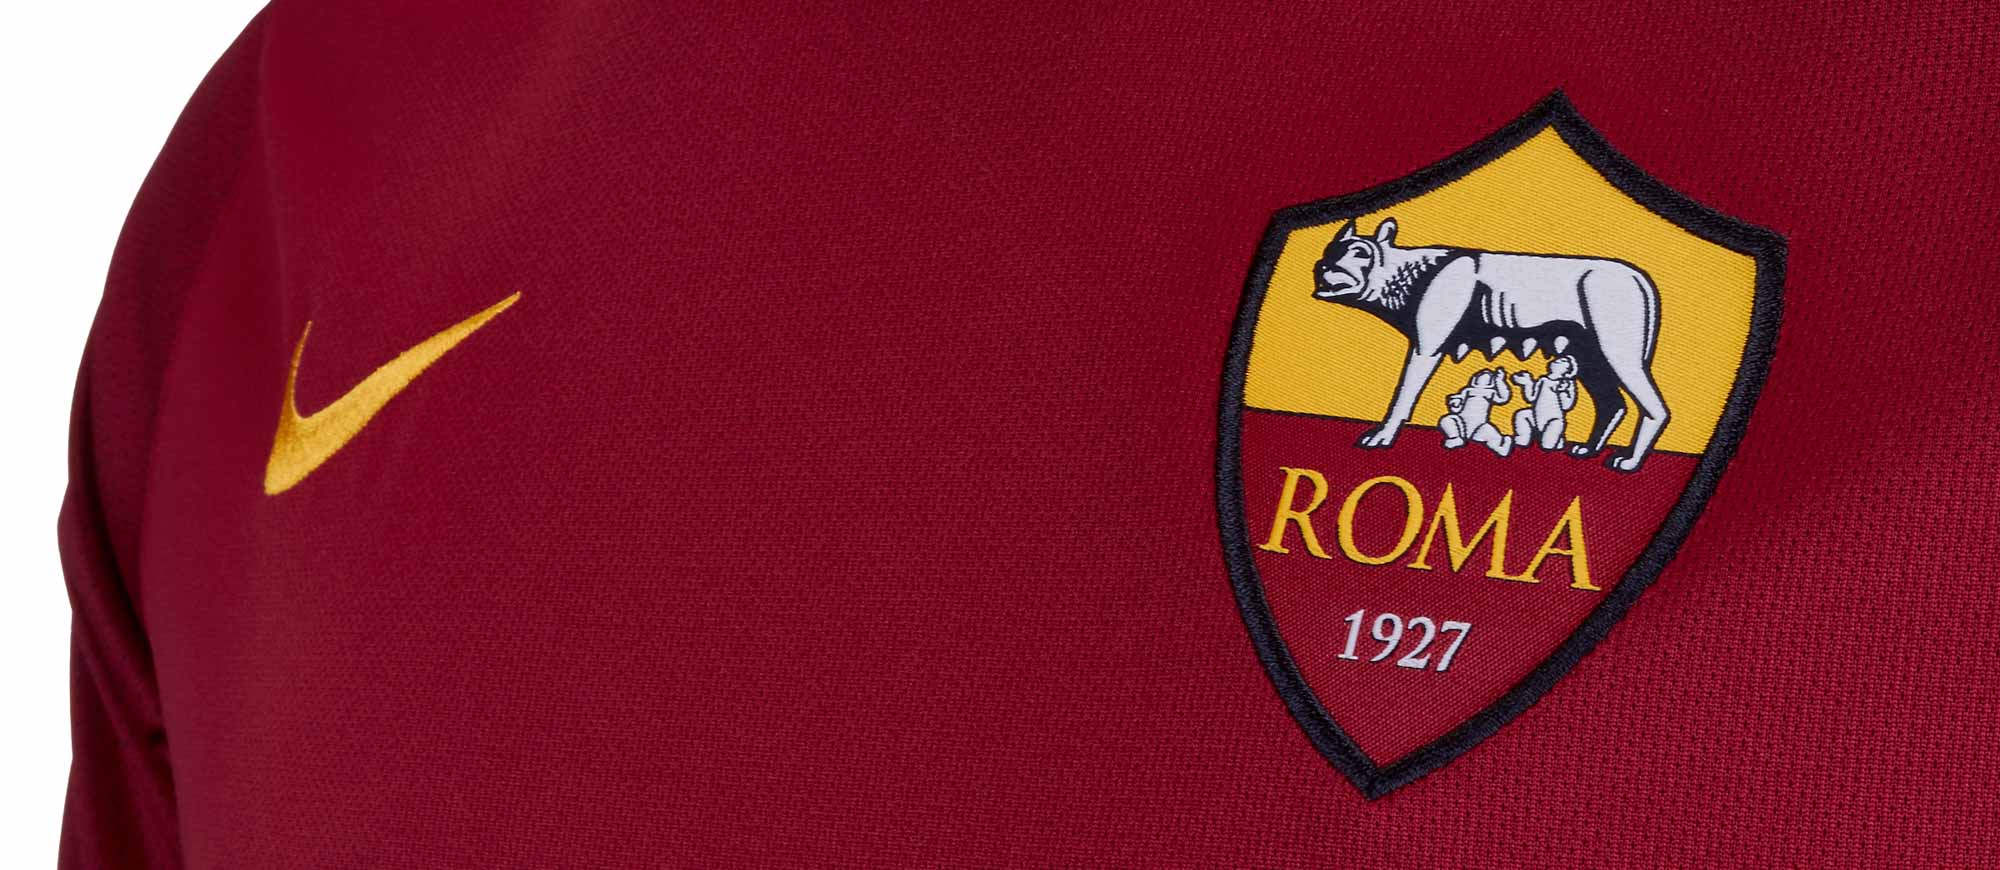 Nike AS Roma Home Jersey 2017-18 - Soccerpro.com